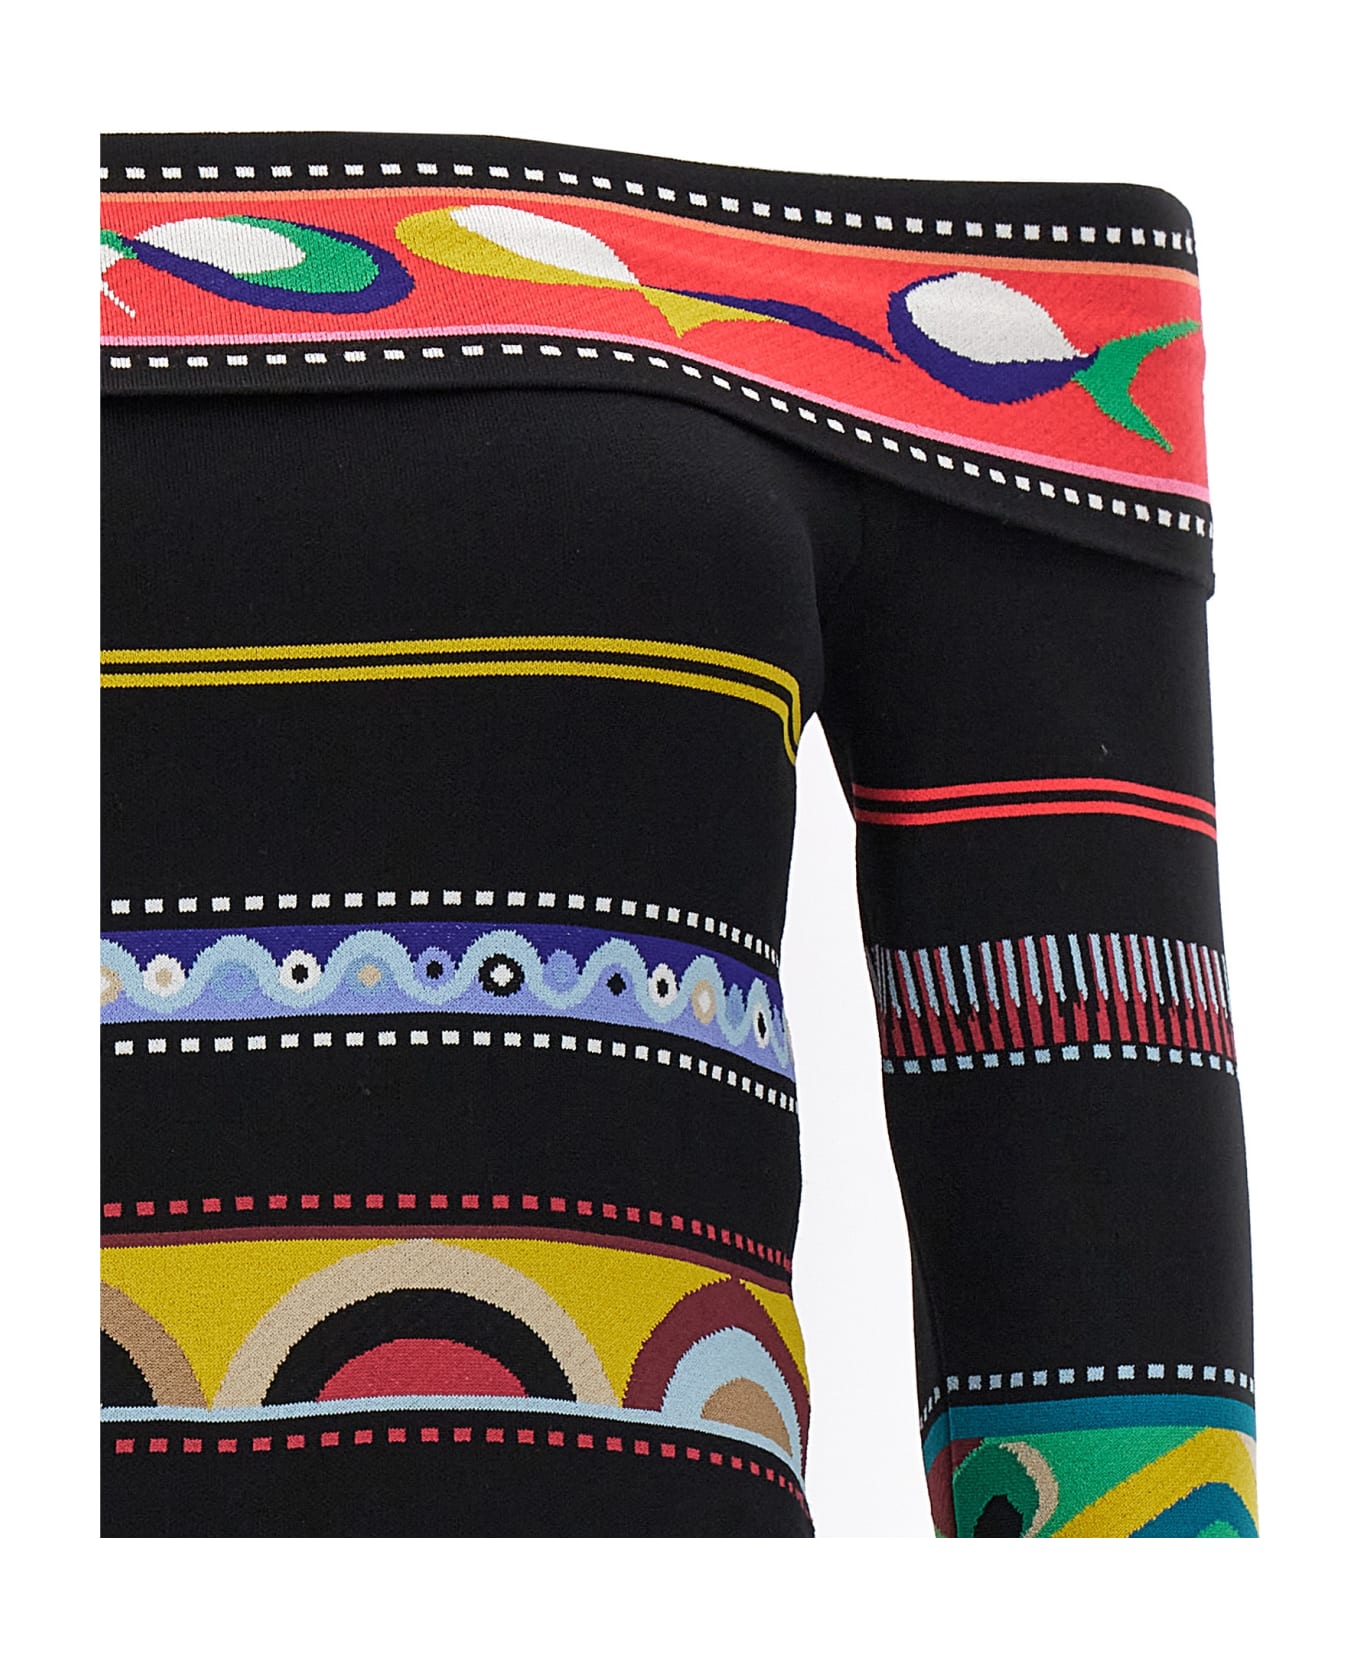 Pucci Jacquard Patterned Top - Multicolor